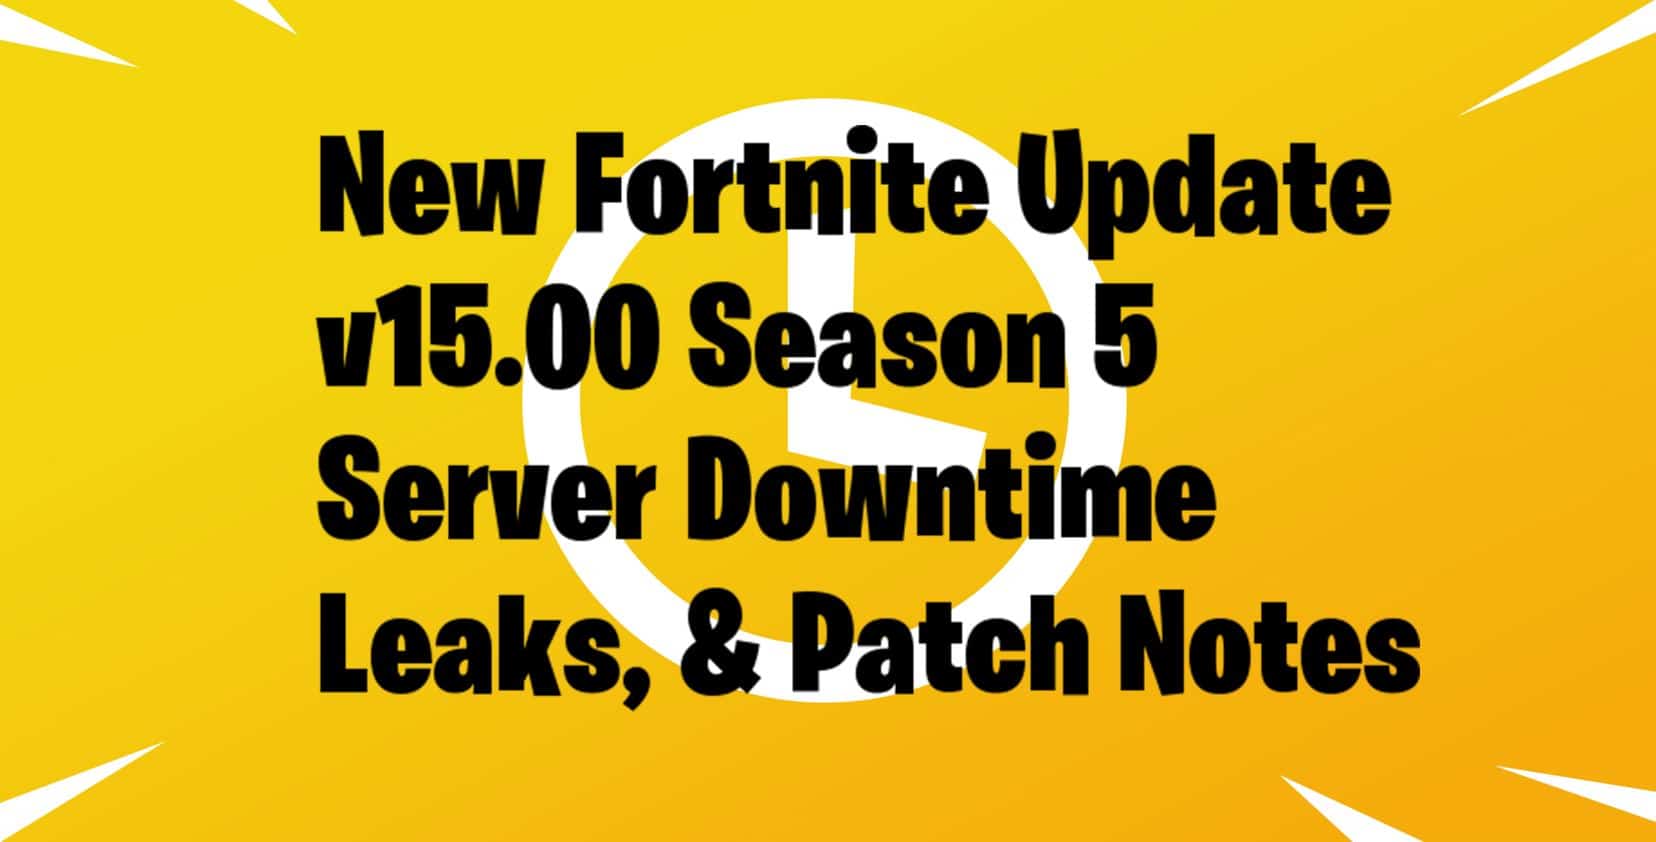 New Fortnite Update v15.00 Season 5